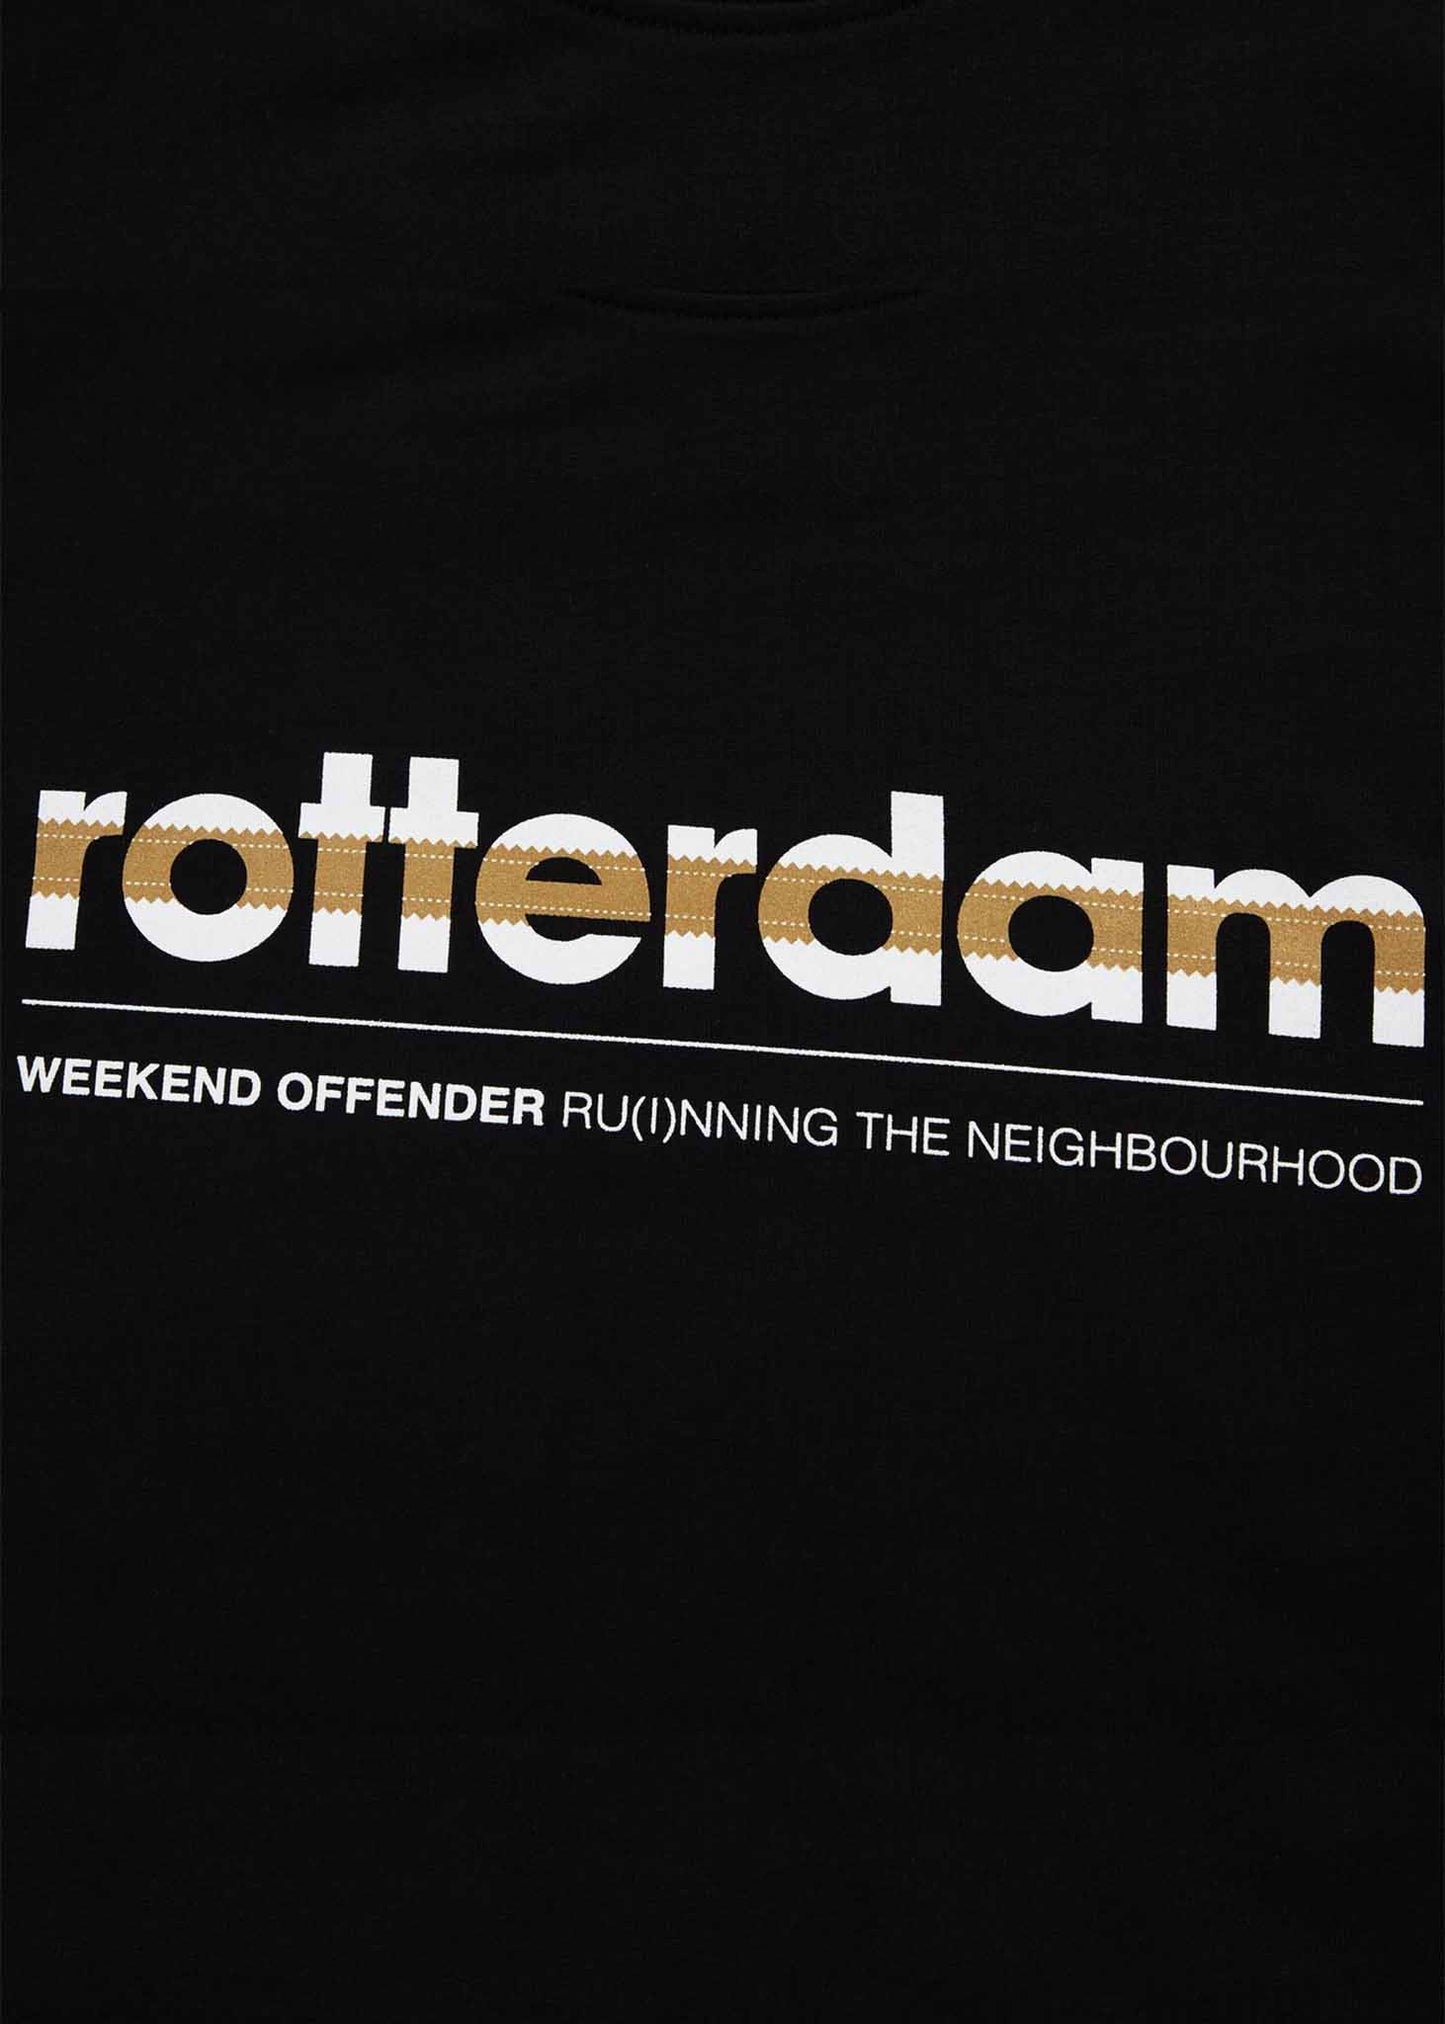 City series 4 sweat - Rotterdam